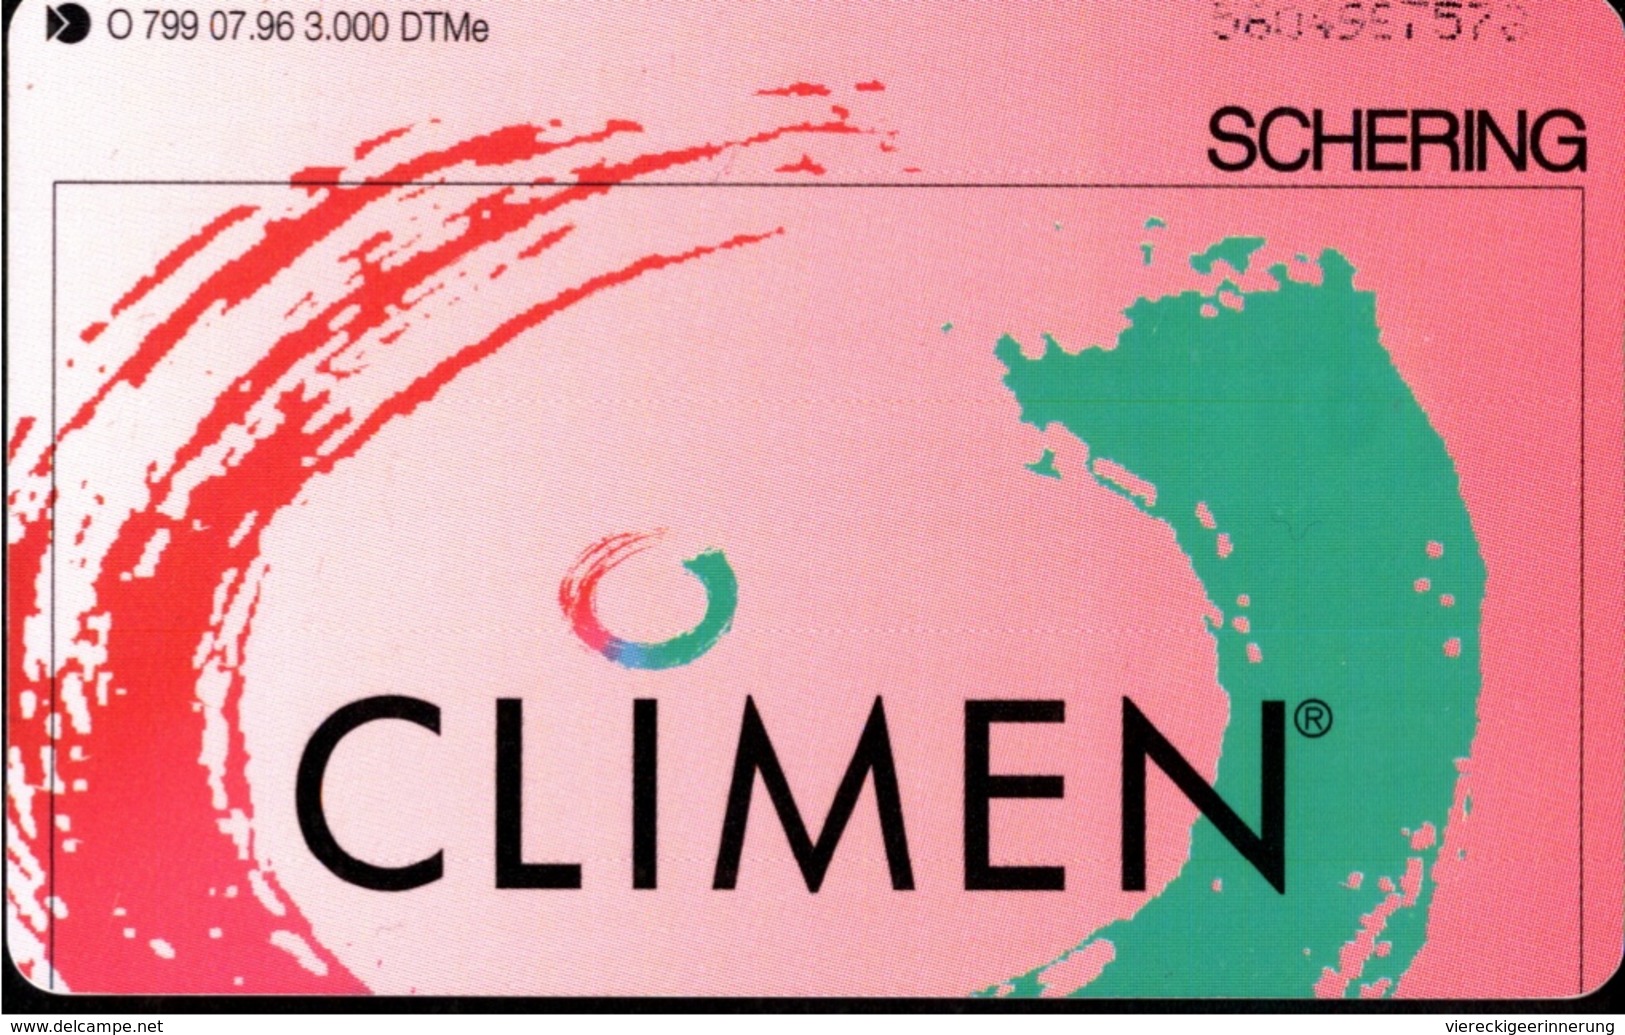 ! Telefonkarte, Telecarte, Phonecard, 1996, O799, Auflage 3000, Schering, Climen, Germany - O-Series : Series Clientes Excluidos Servicio De Colección